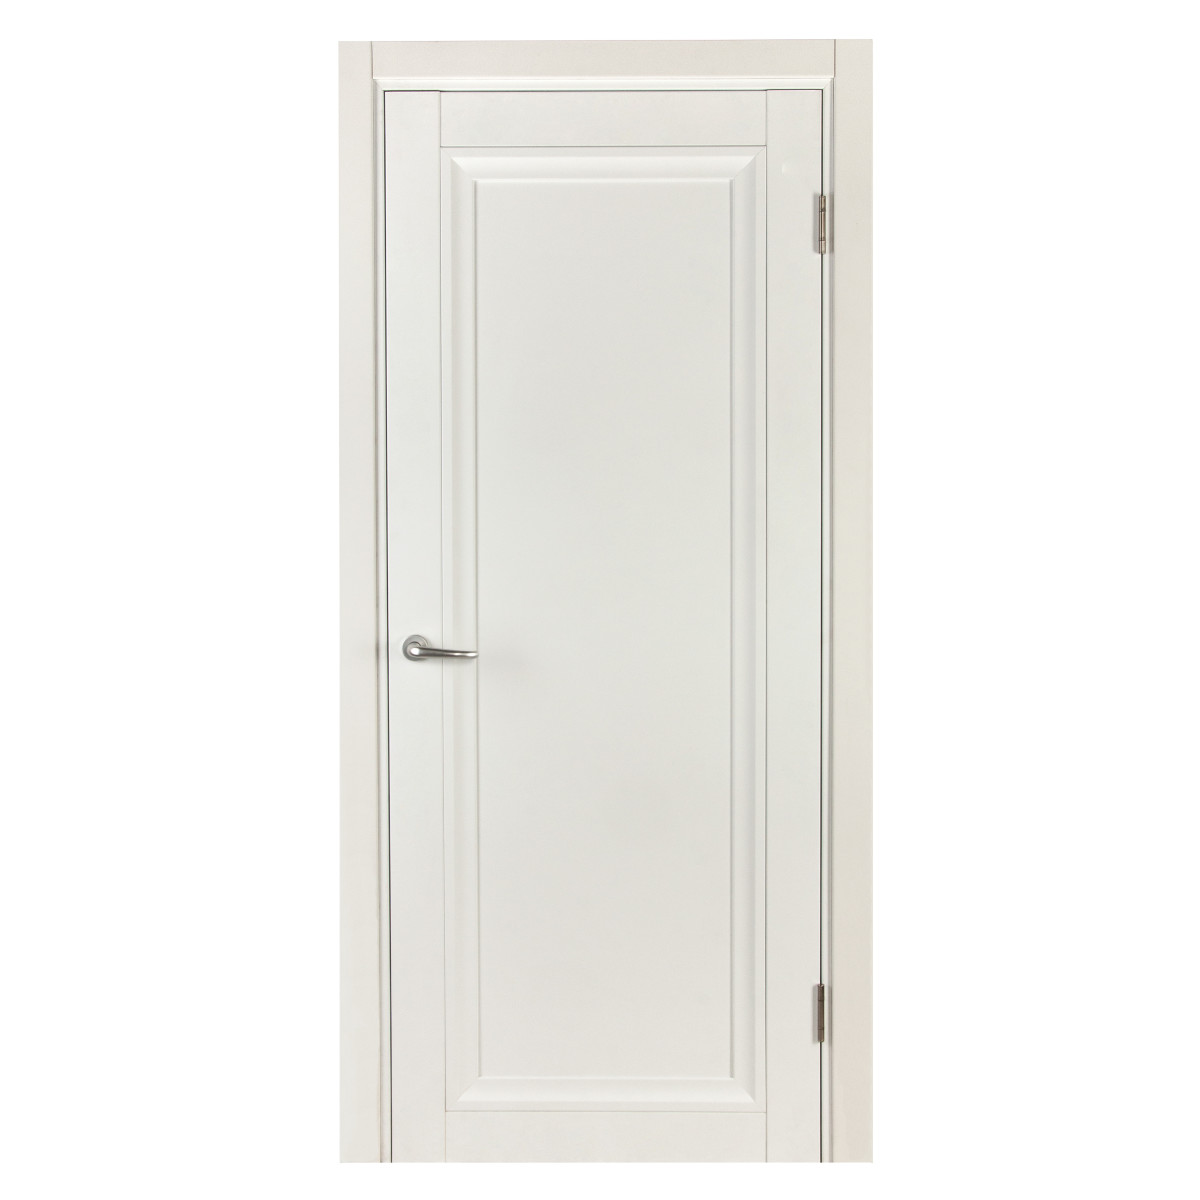 Дверь межкомнатная Нобиле 60х200 см, цвет белый, с замком